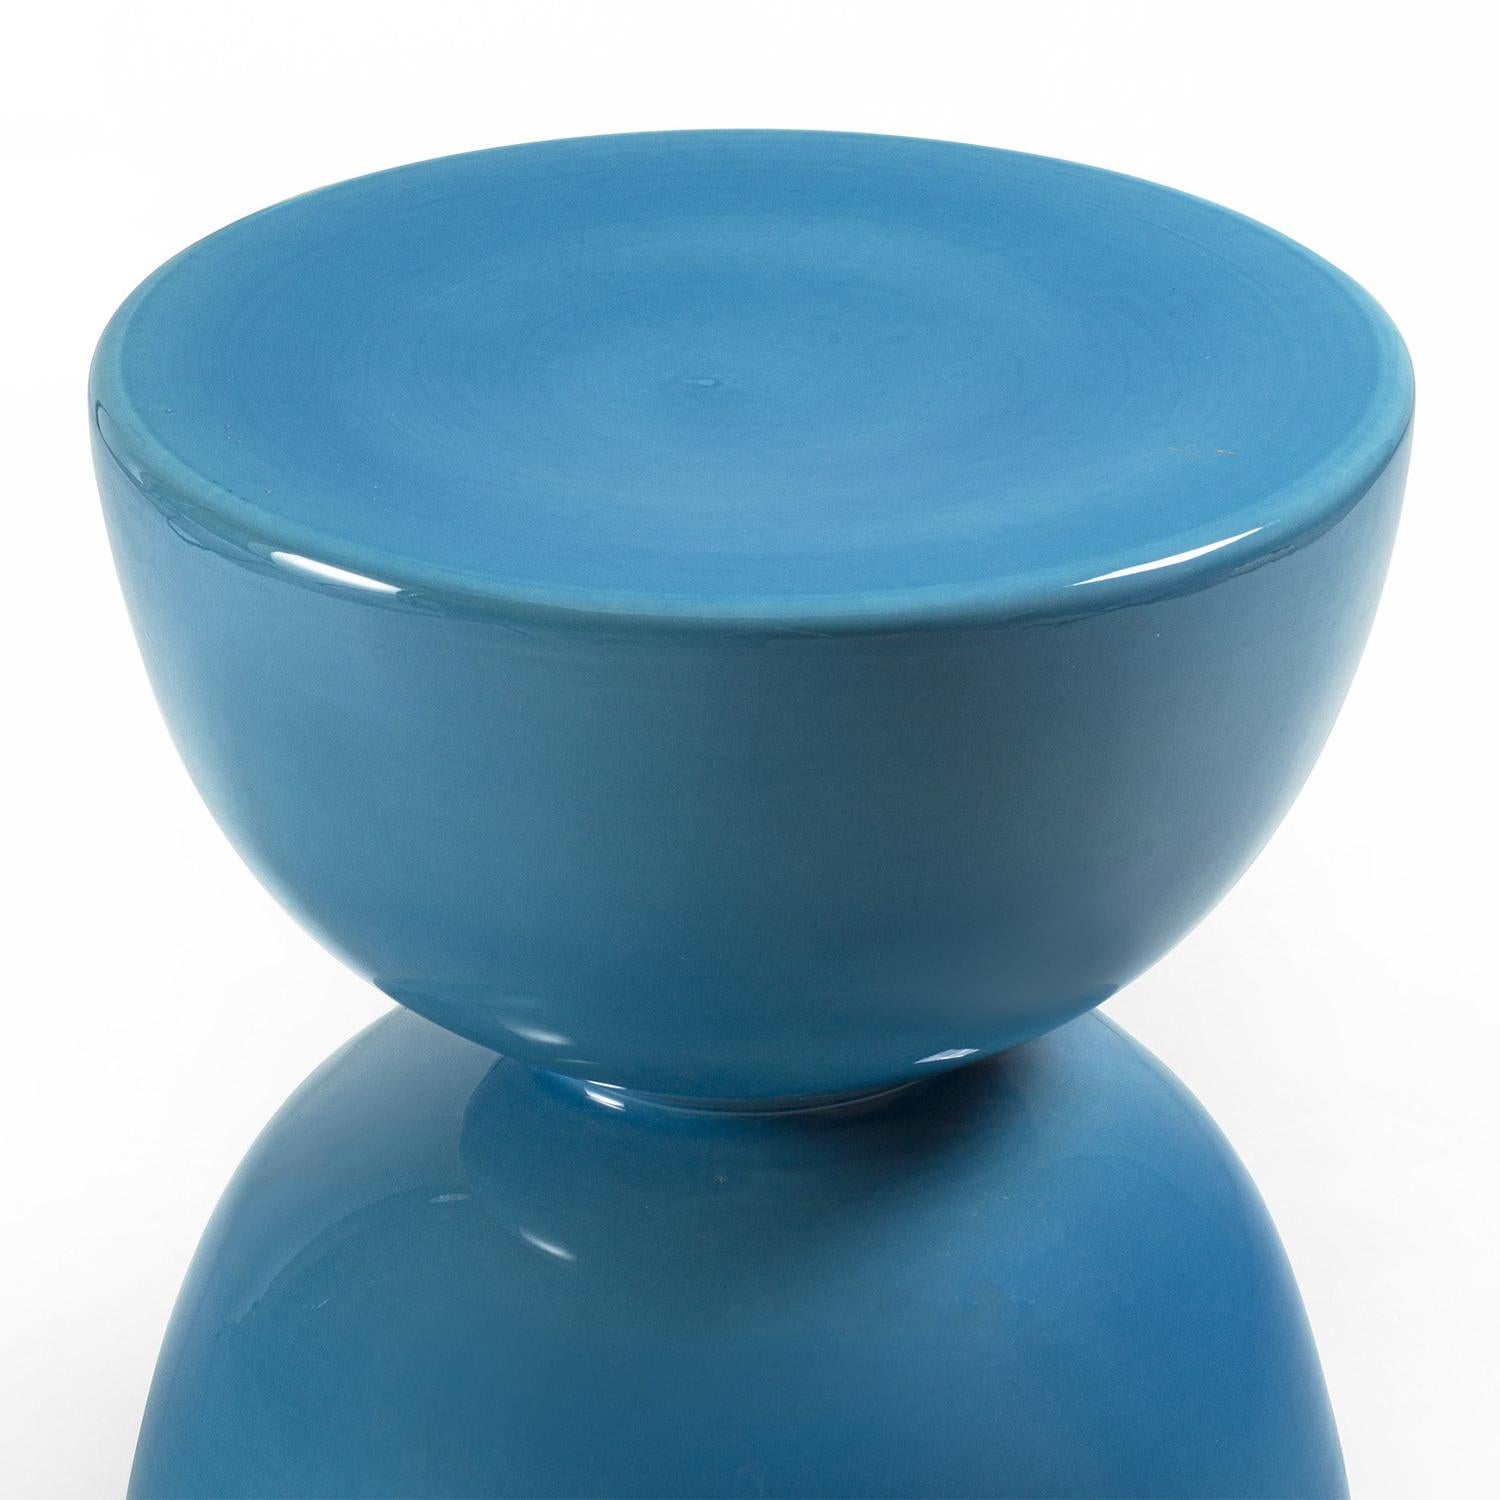 Stool Spheres Blue all in enameled 
ceramic in blue finish.